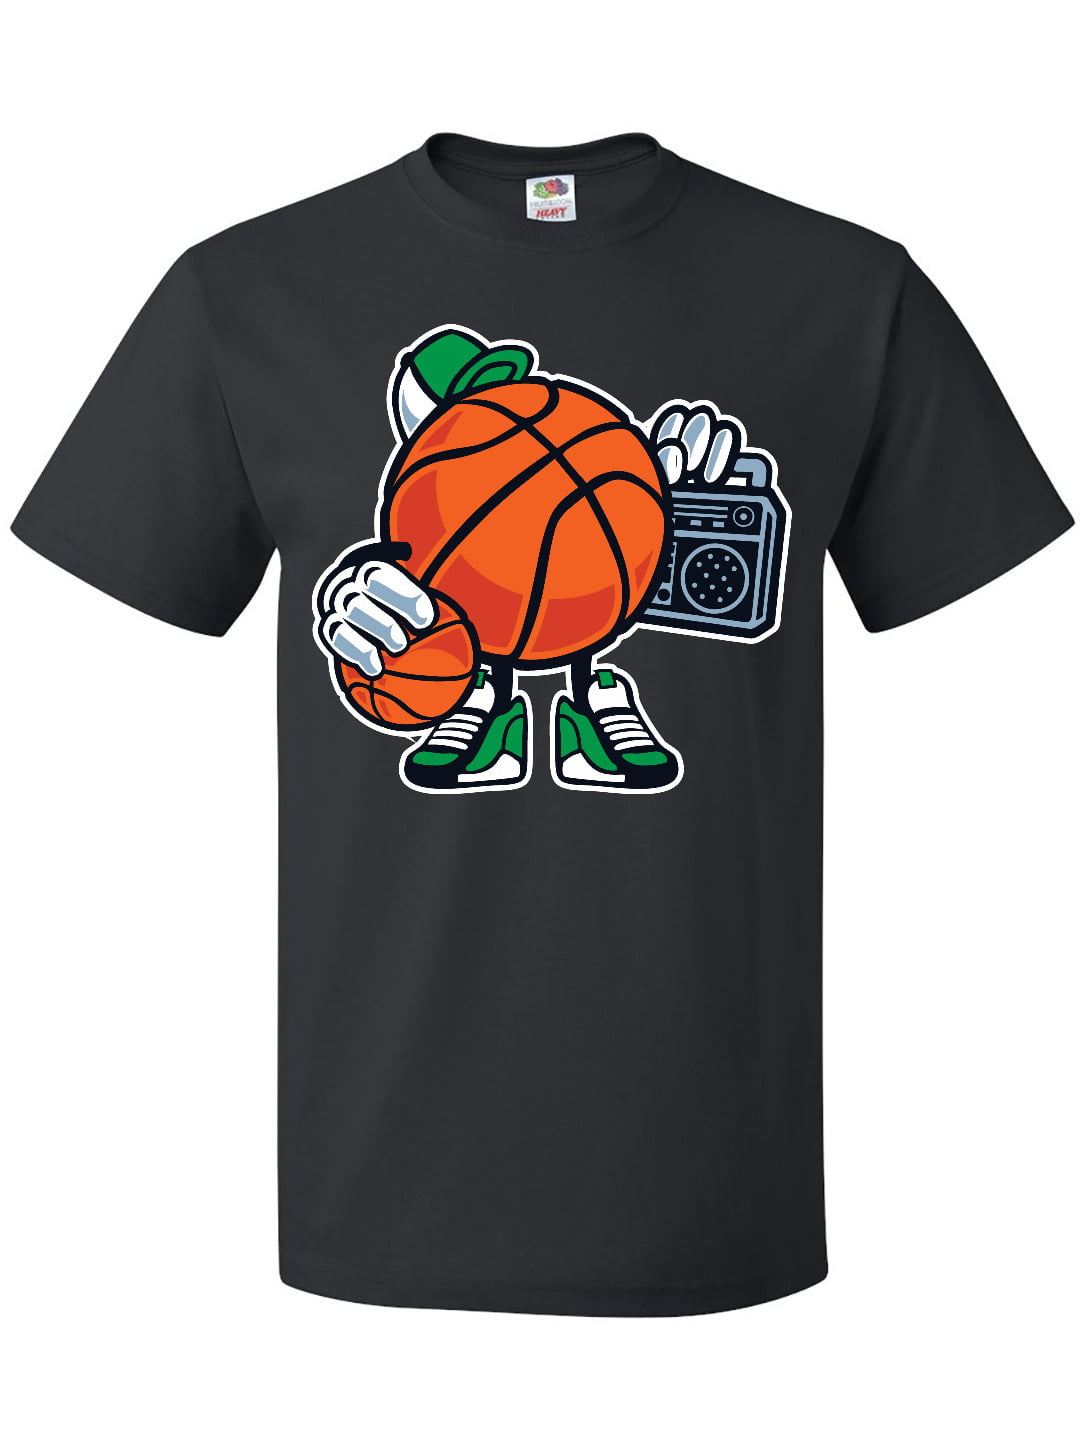 Inktastic Street Basketball T-Shirt - Walmart.com